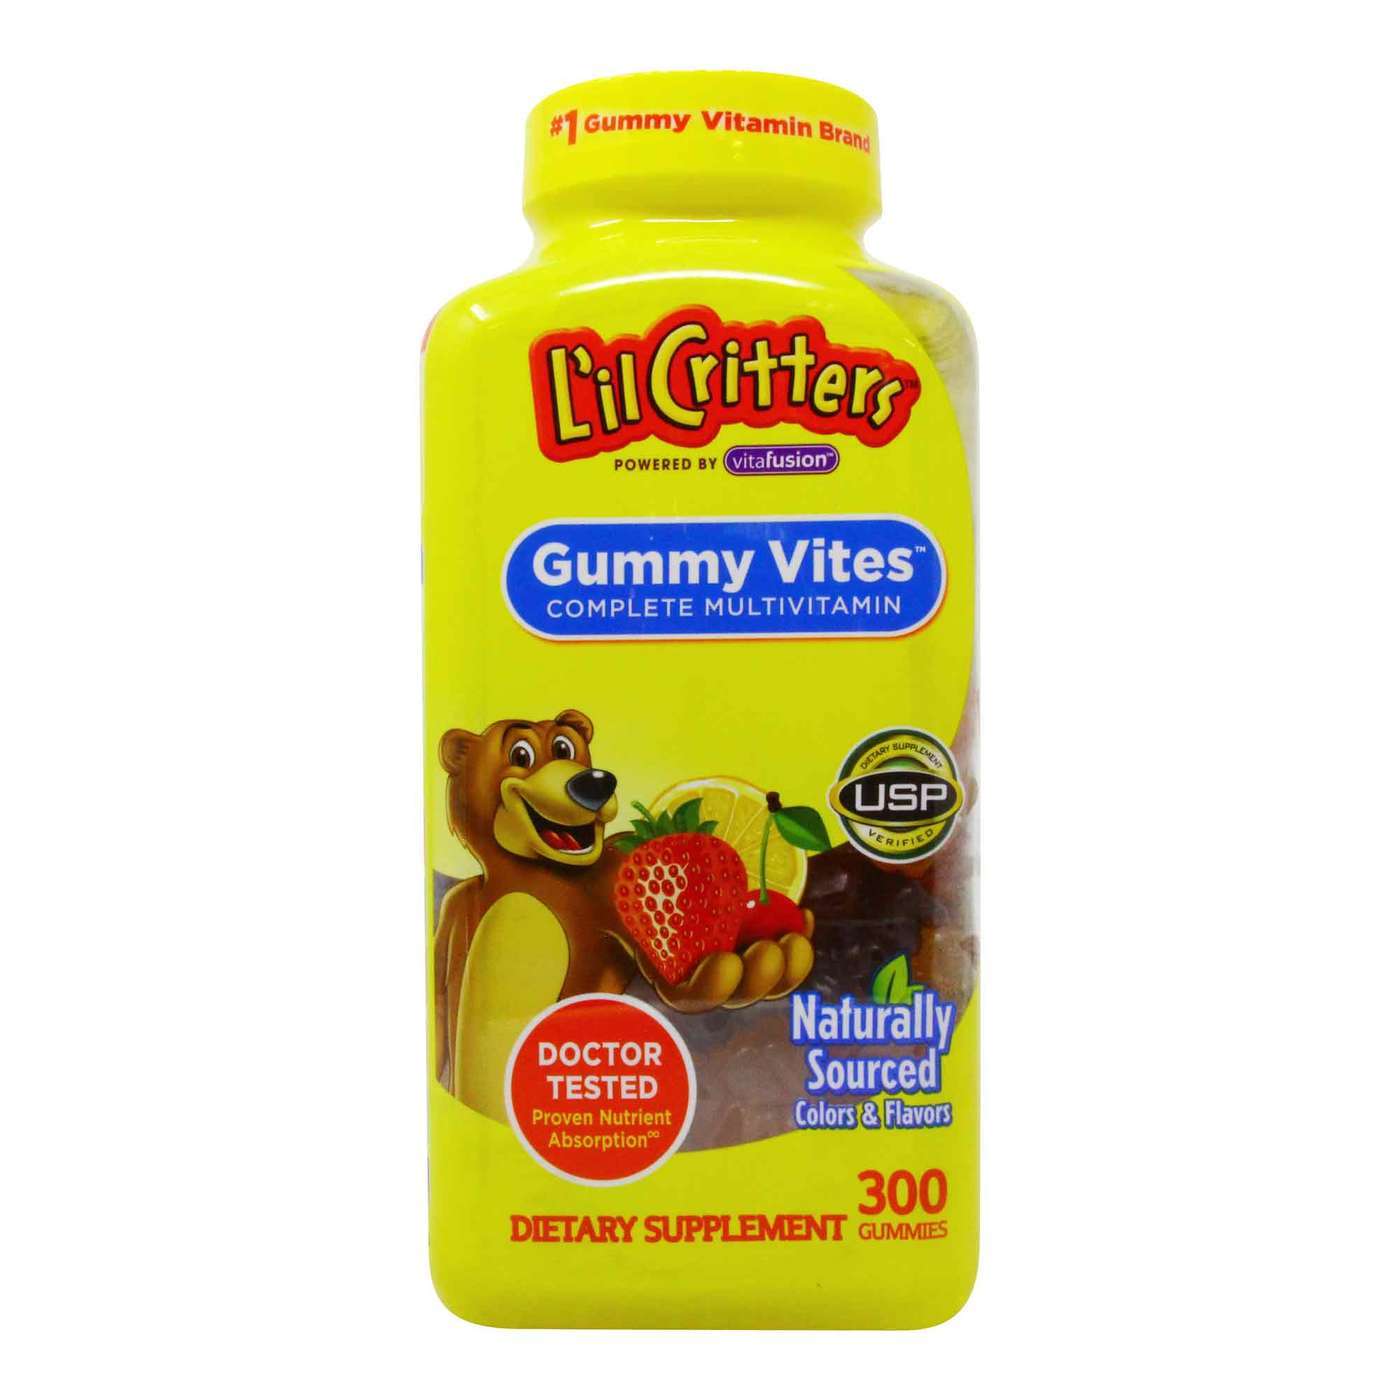 Lil Critters Gummy Vites Complete Multivitamin 300 Gummies 